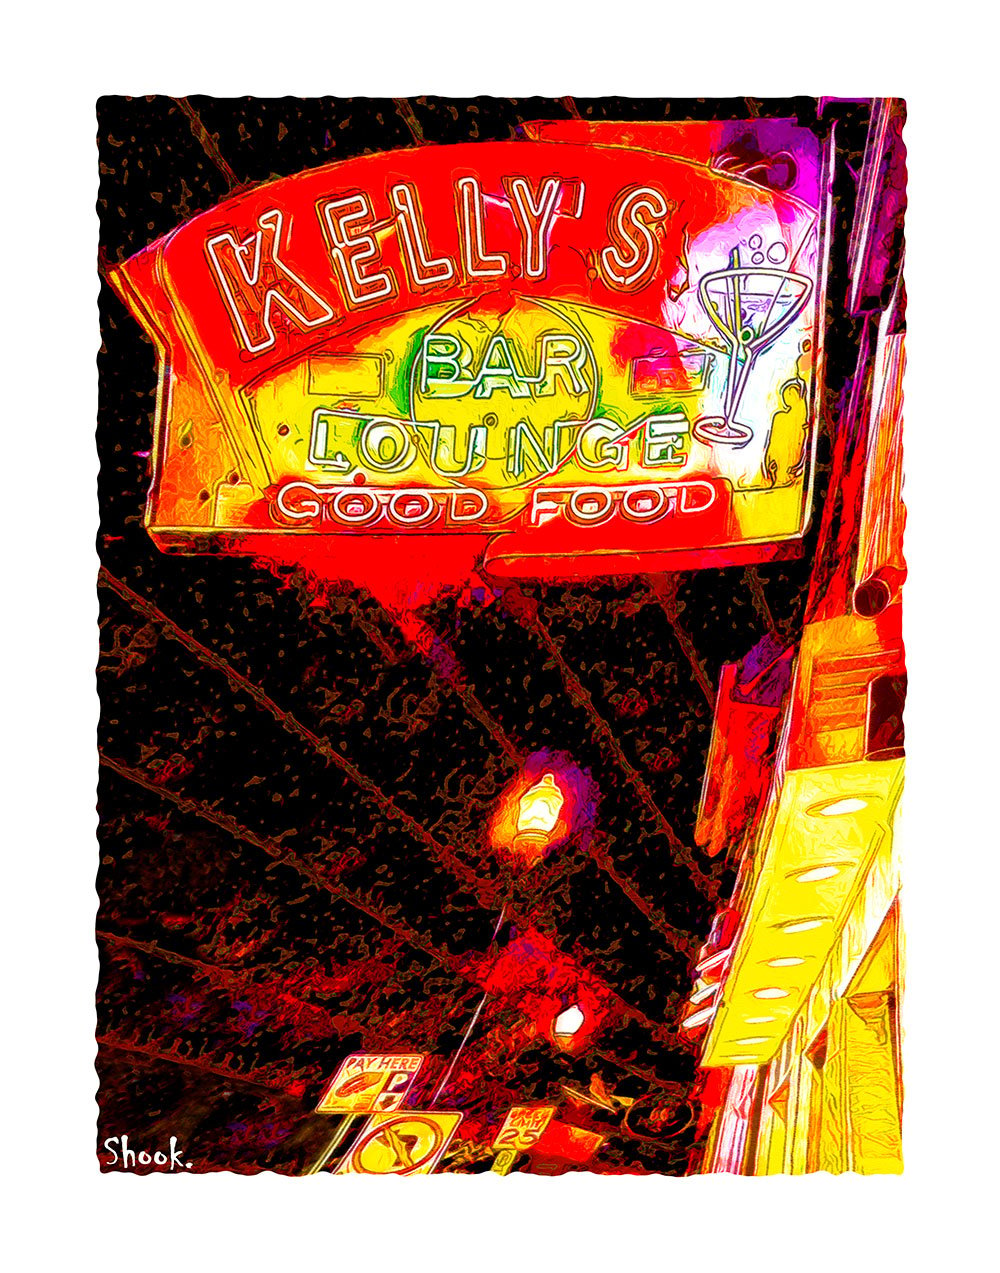 Kelly's Bar and Lounge, Pittsburgh PA Giclée Art Print (Multi-size options)